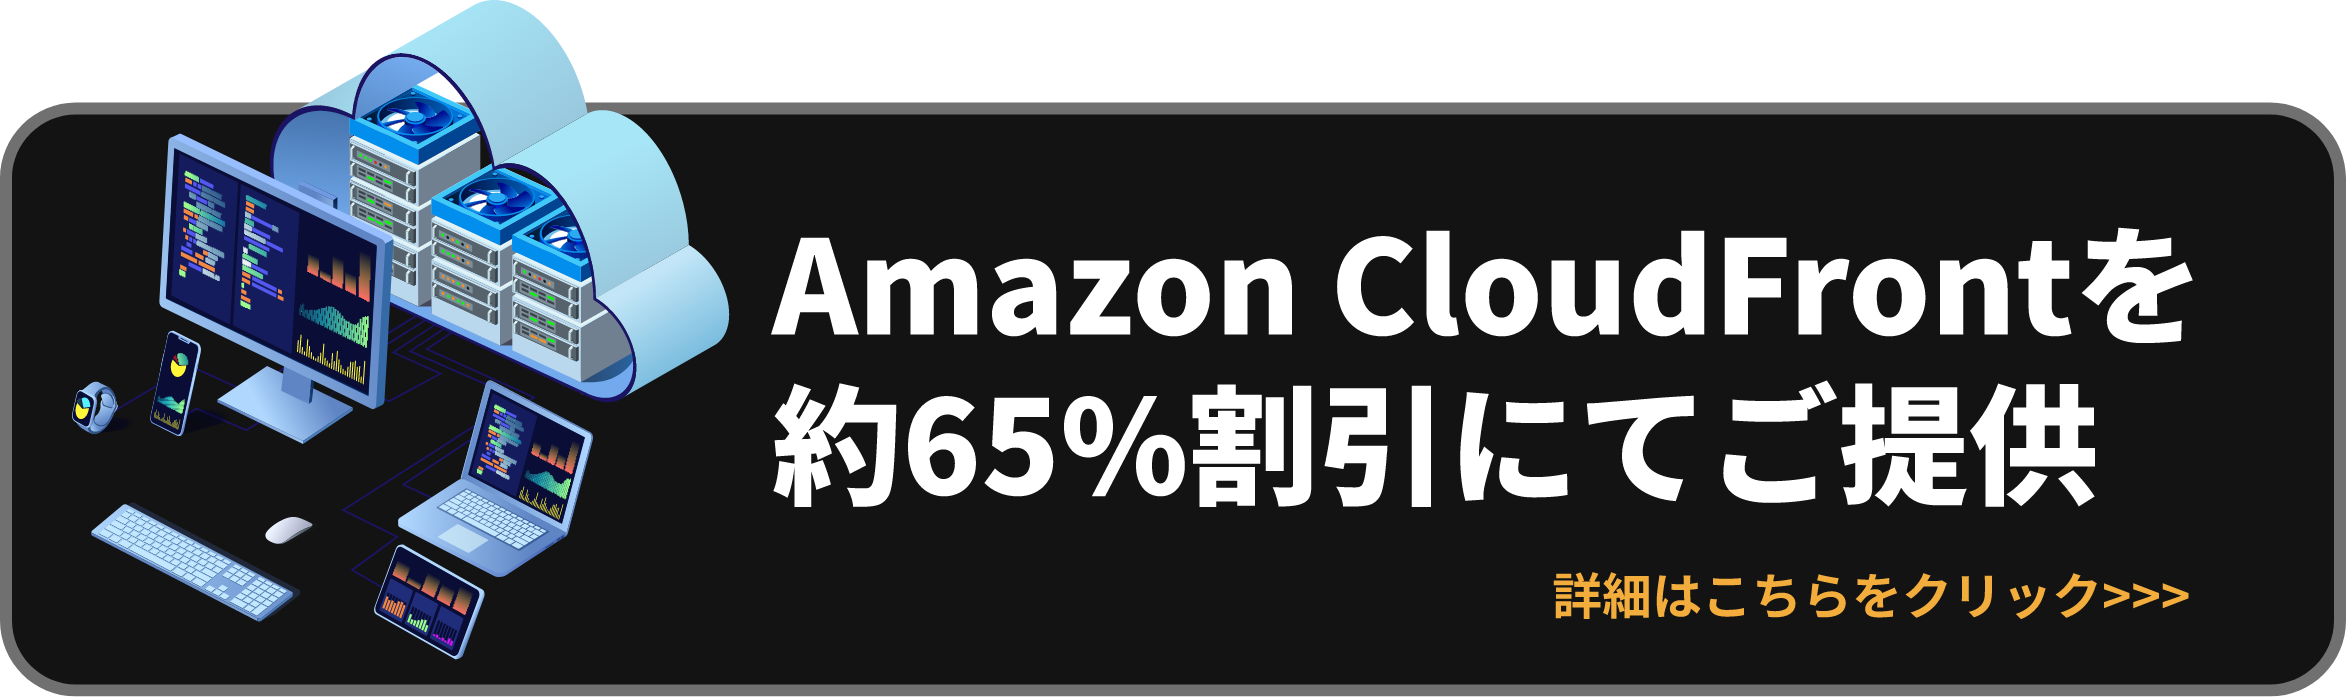 Amazon CloudFrontを約65%割引にてご提供